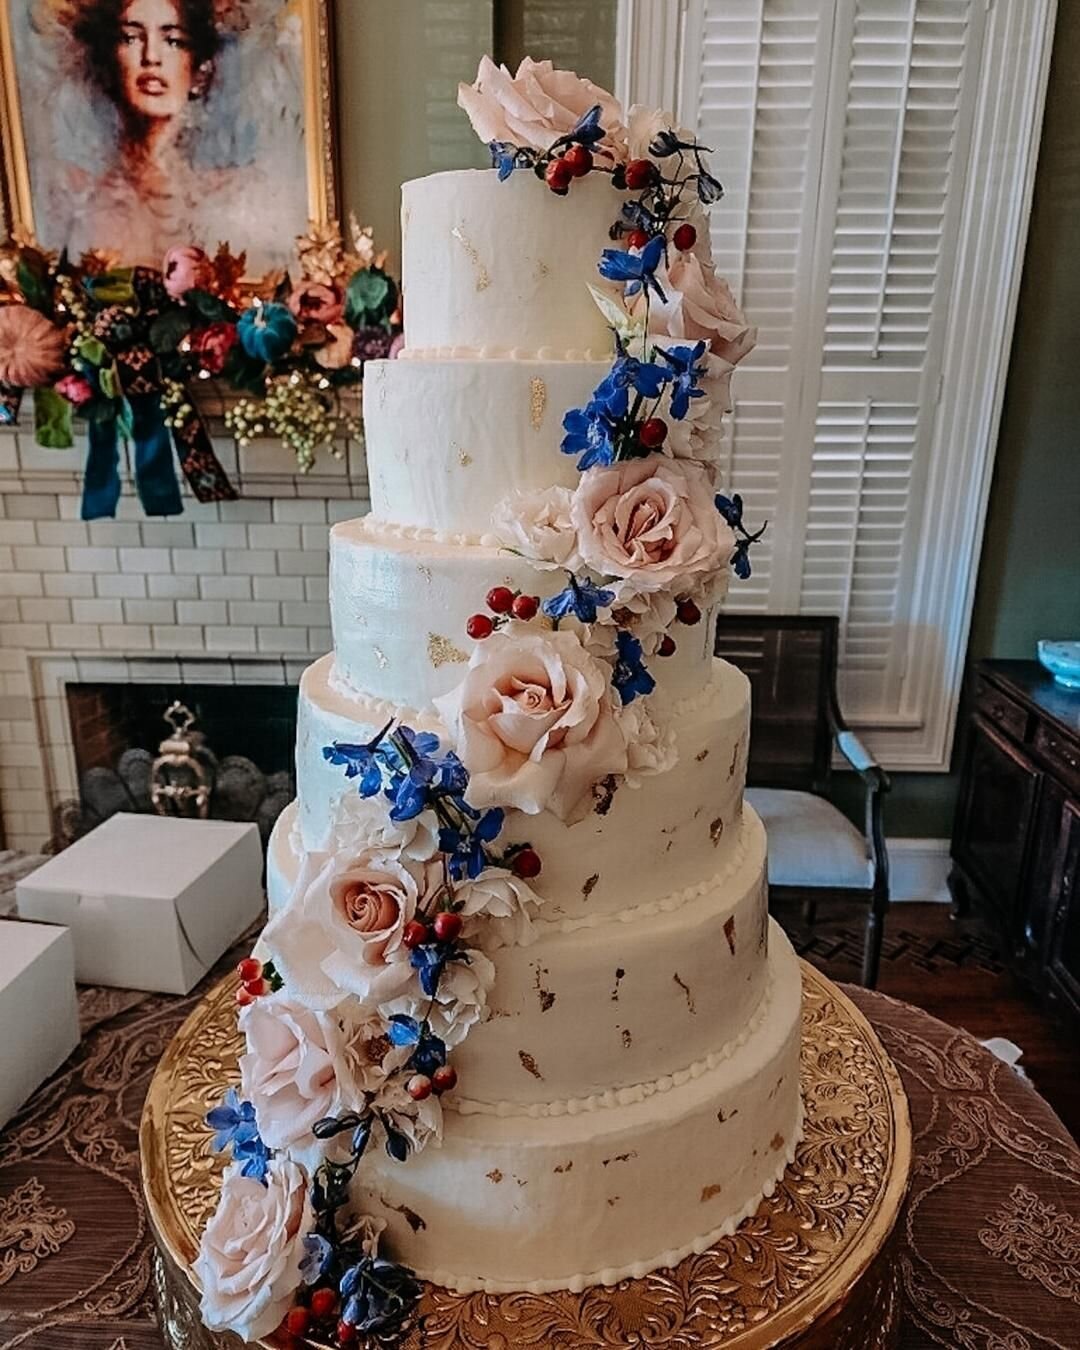 Dreaming of Cake! #cakesbycathyyoung #wedding #weddingcake #cake #cakedesign #cakedesigner #cakesofinstagram #sanantonioweddings #weddingsinsanantonio